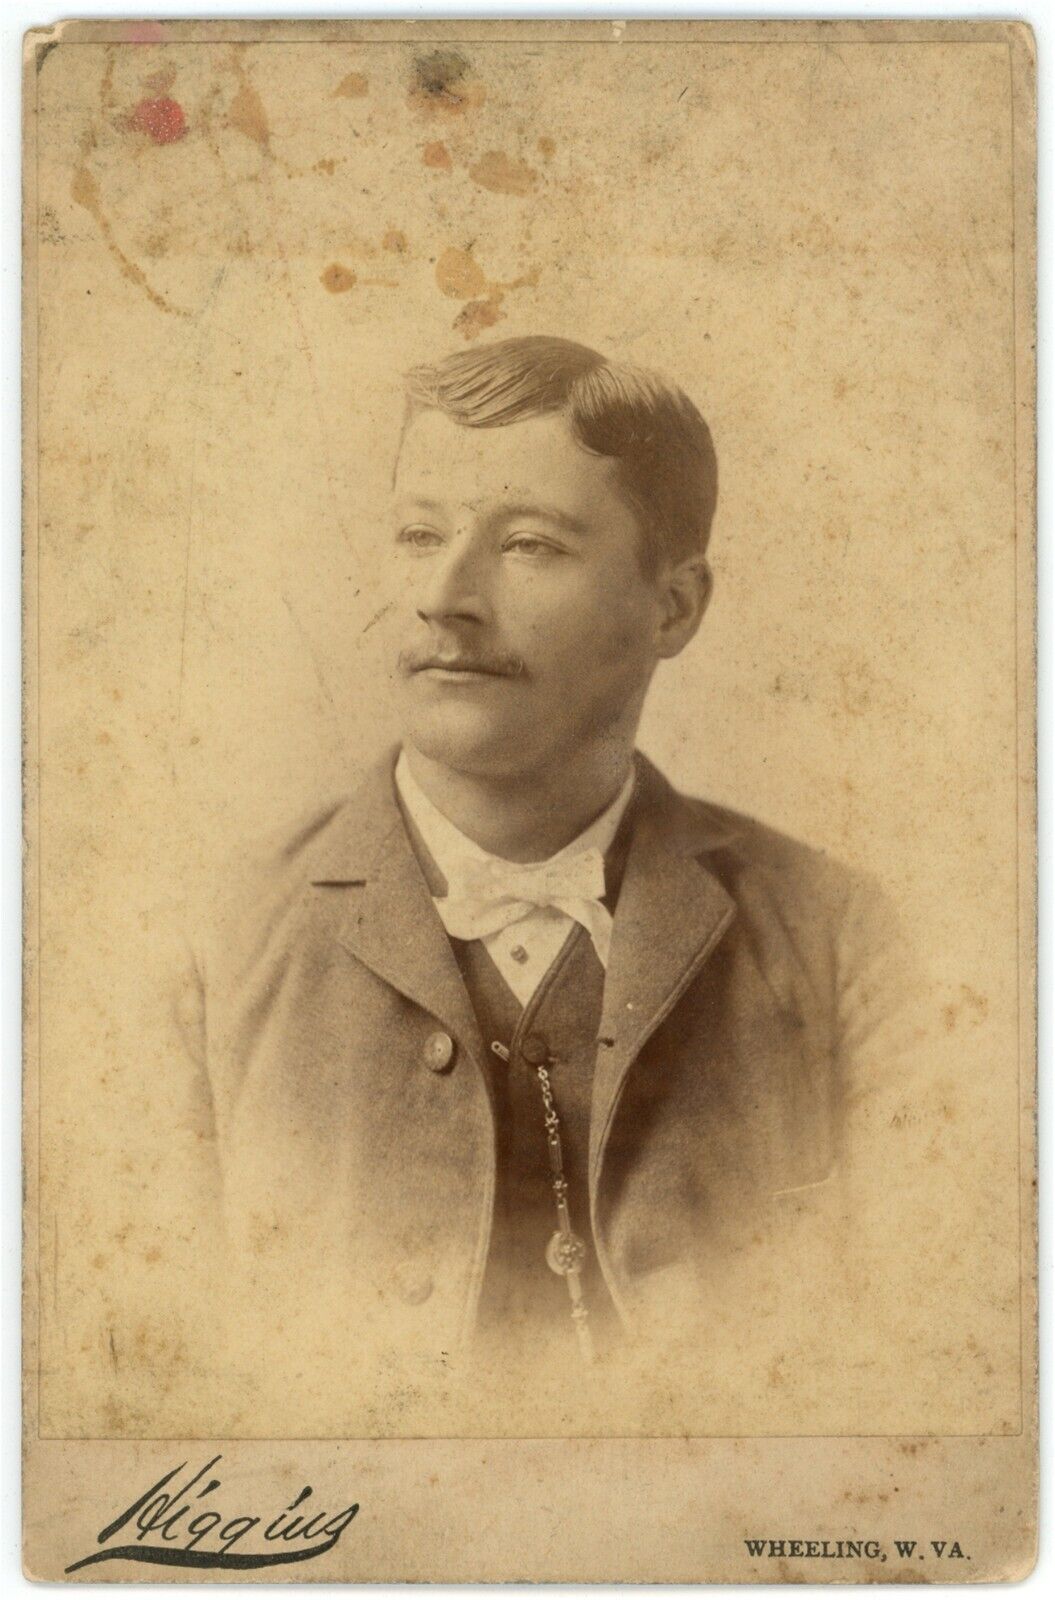 CIRCA 1890'S 2 CABINET CARD Same Handsome Man Mustache Suit Tie Wheeling W. VA